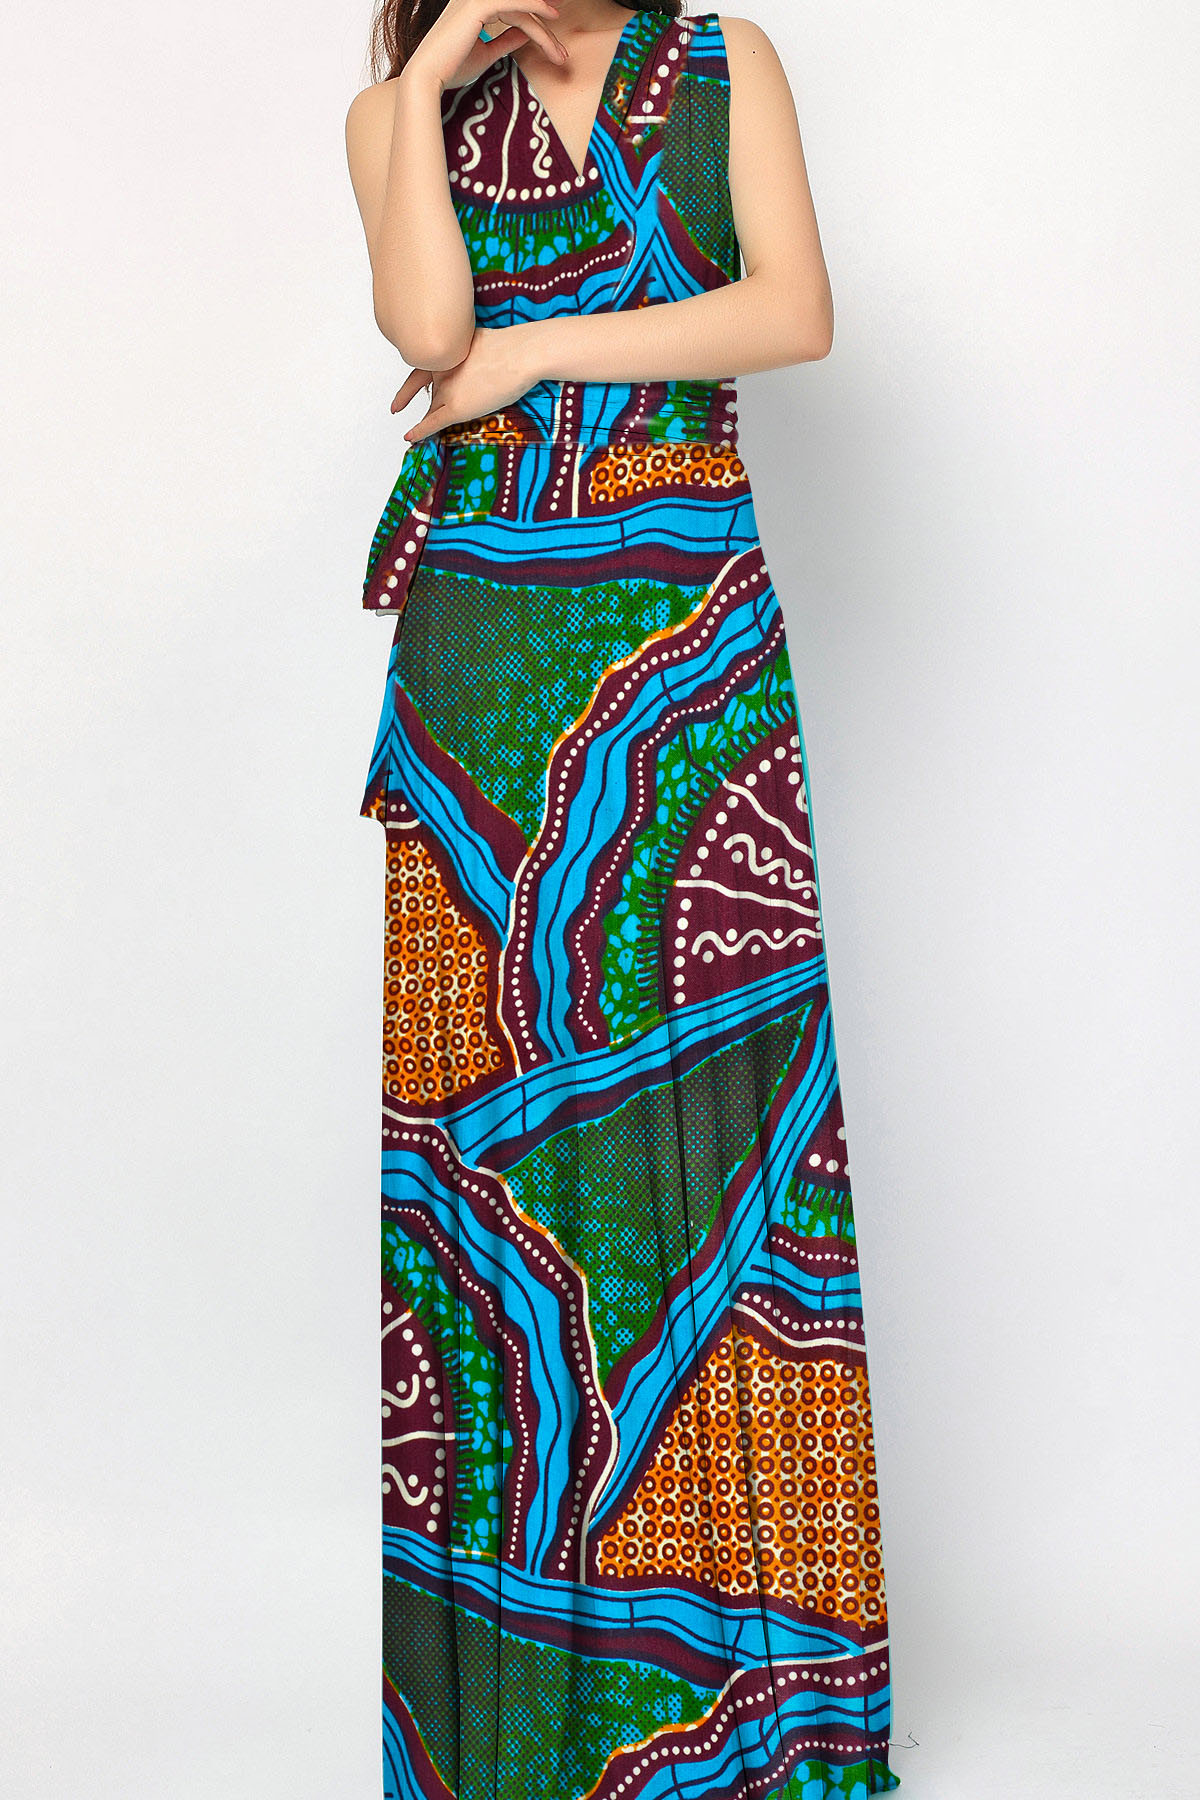 Small Minimum Customized Print Wax Fabric African Design Dresses